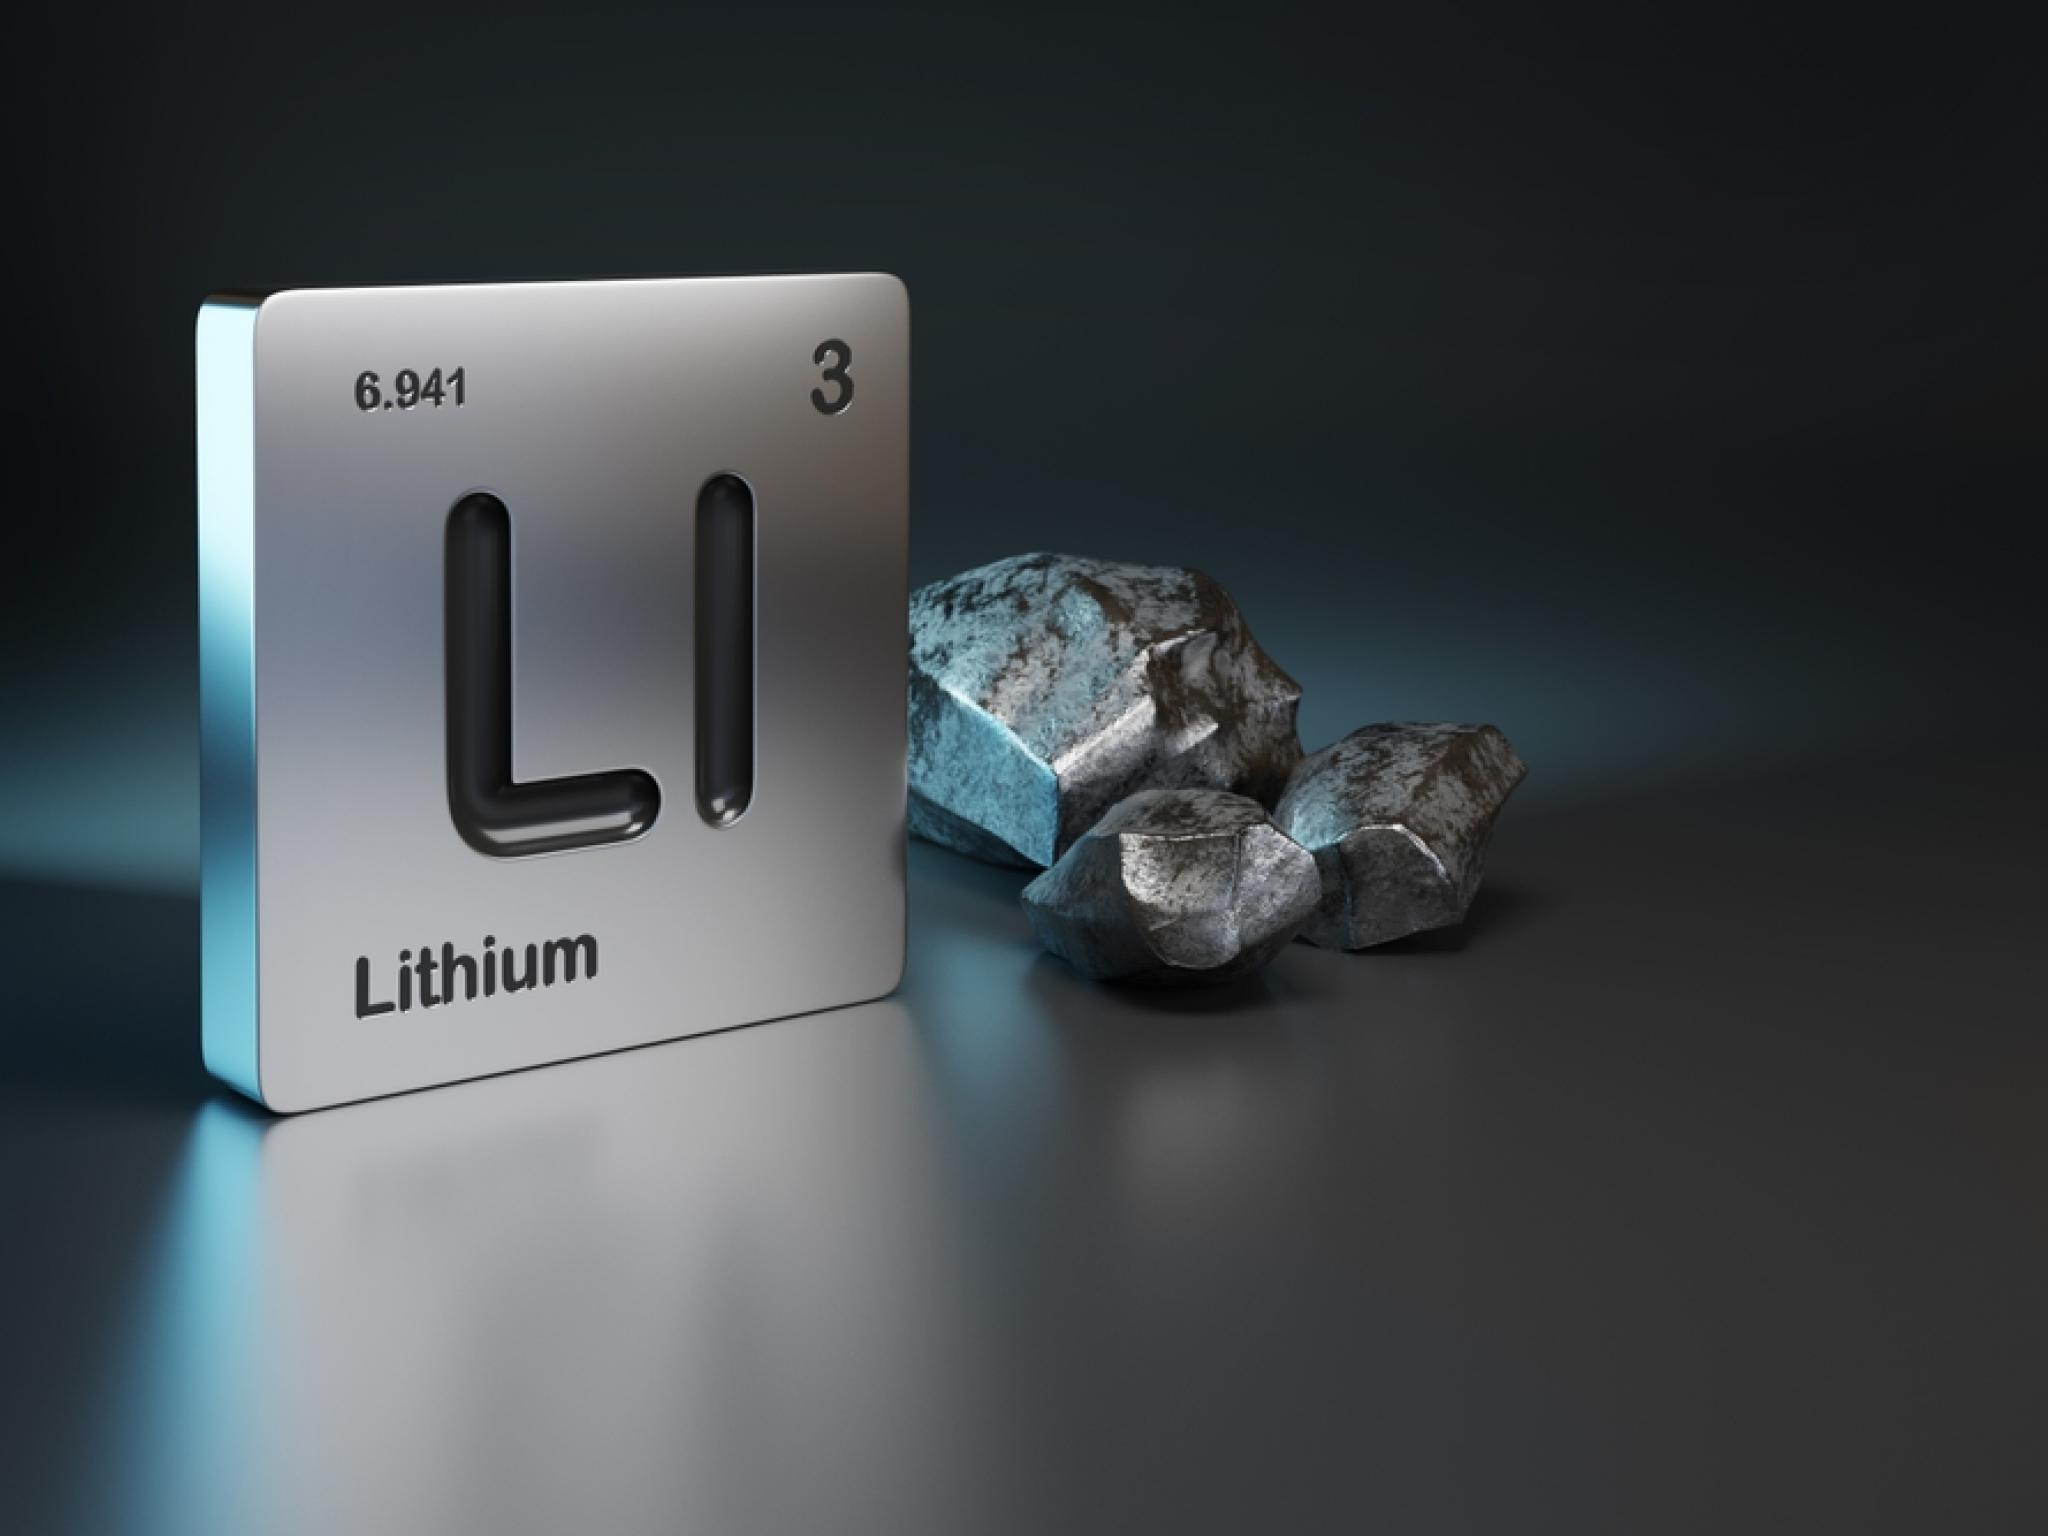  arcadium-lithium-earnings-can-triple-by-fy26-despite-weak-ev-demand-analyst 